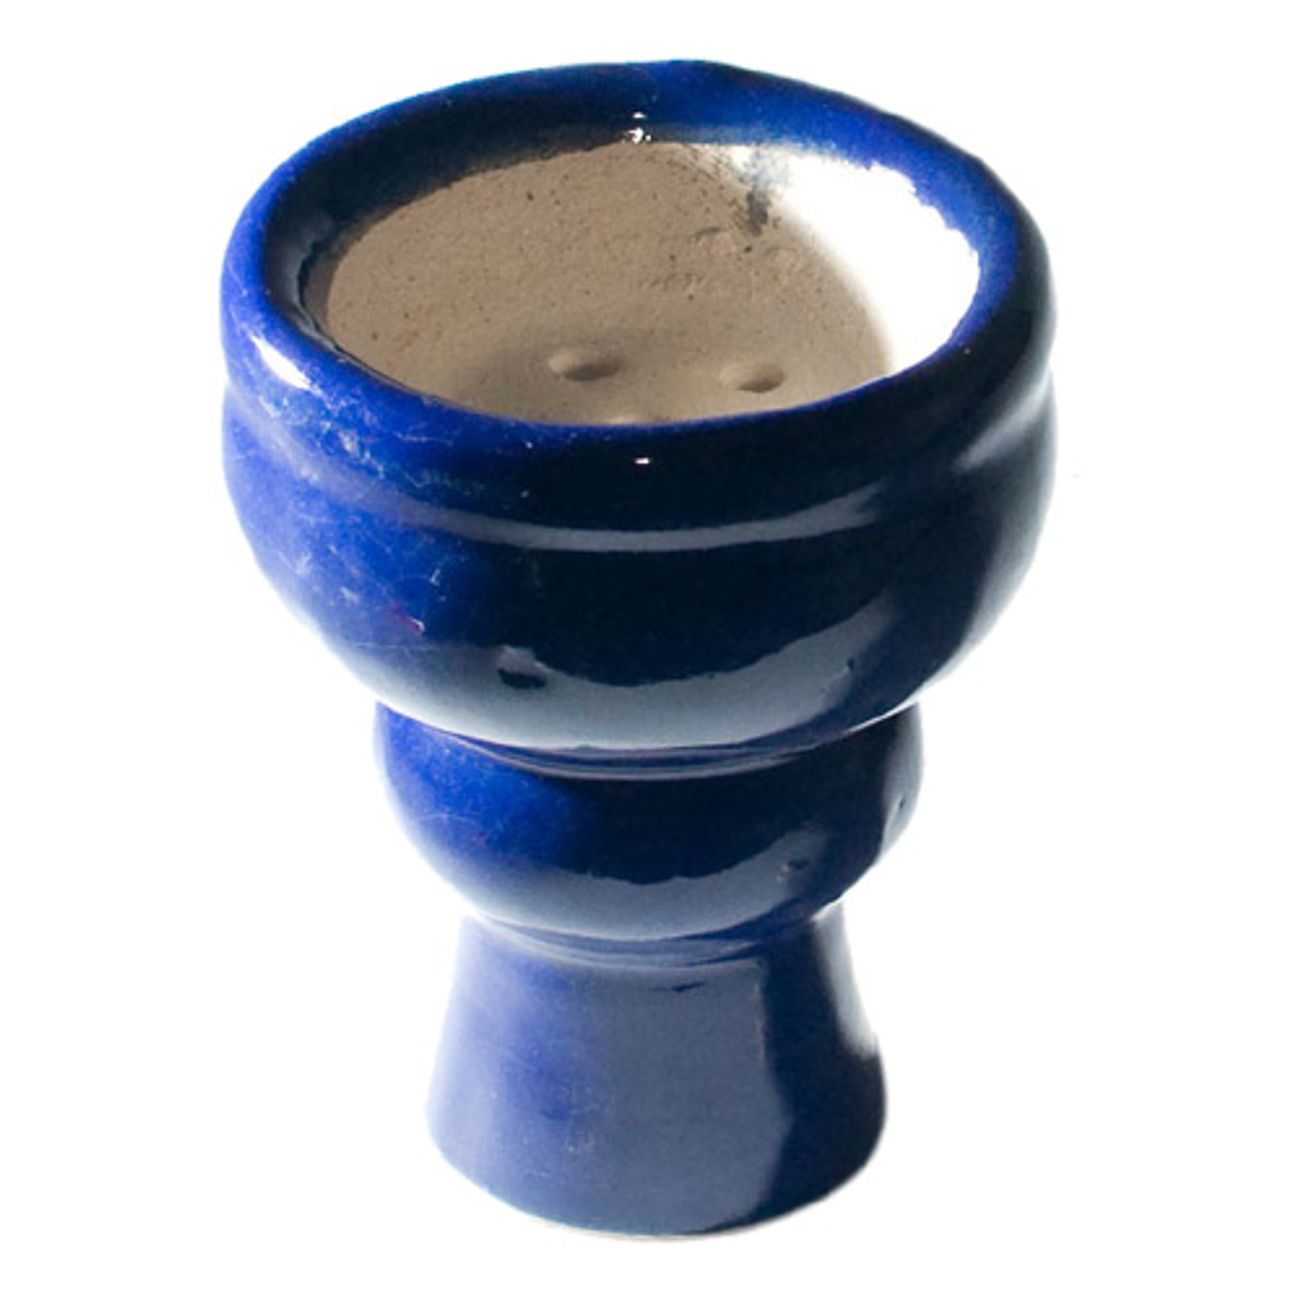 keramikhuvud-aladin-3